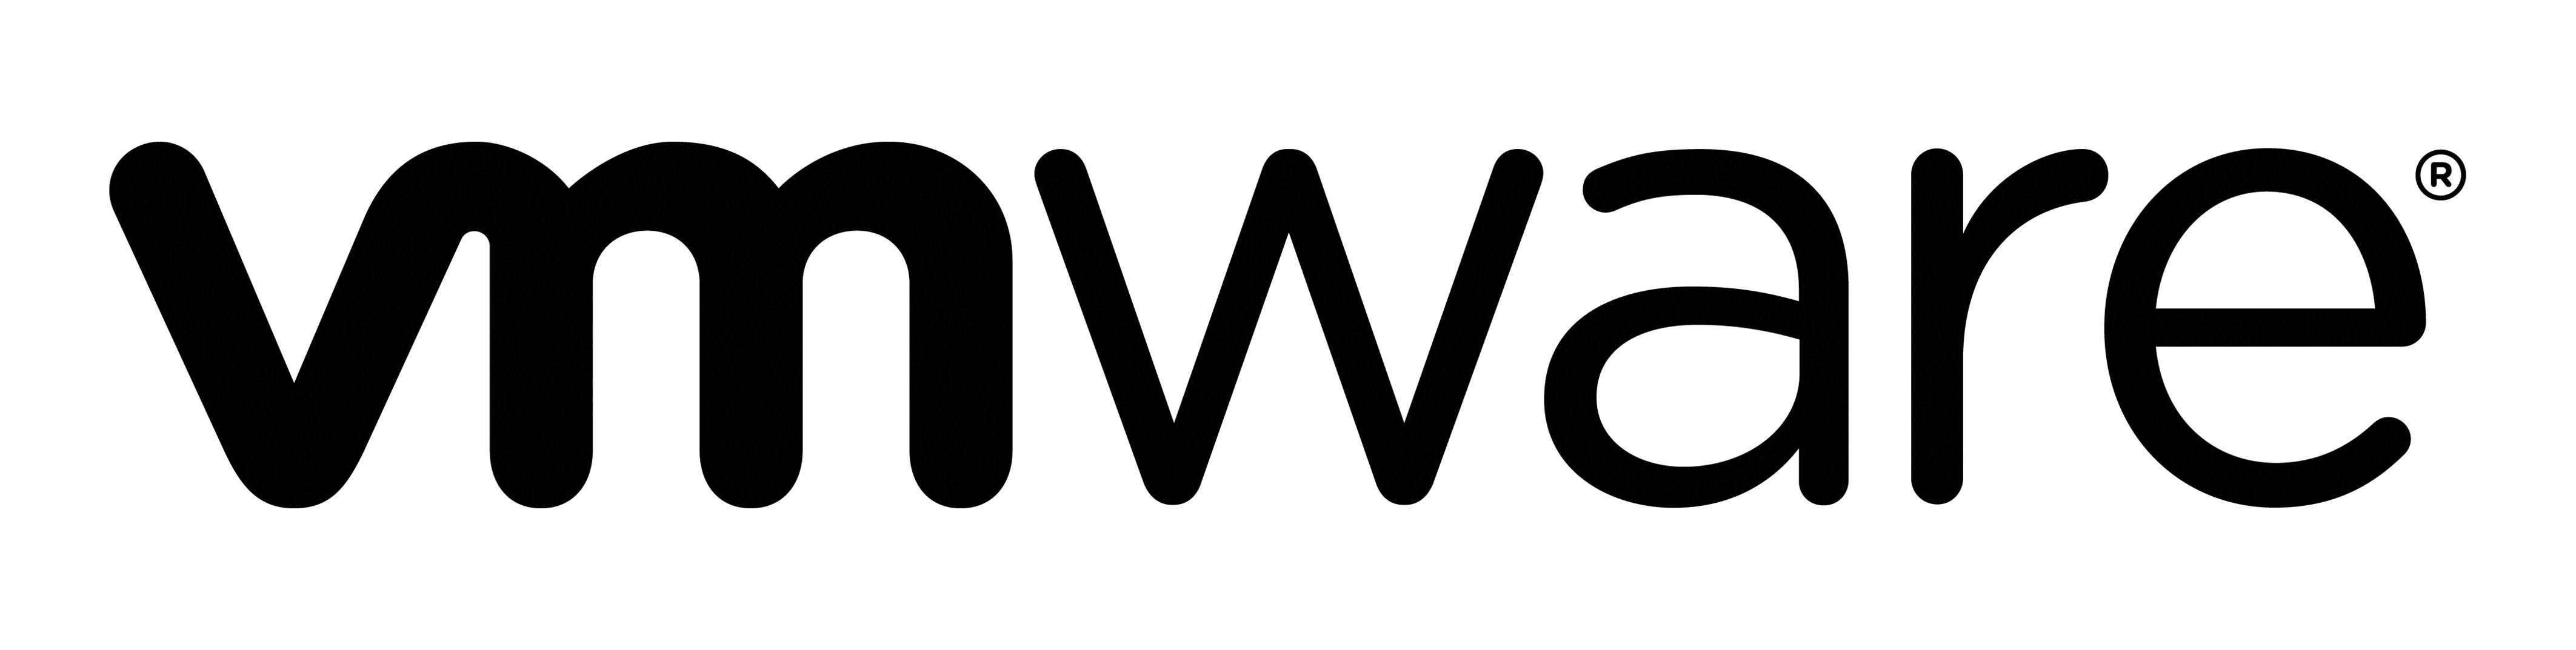 Vmware Inc Logo - VMware, Inc.